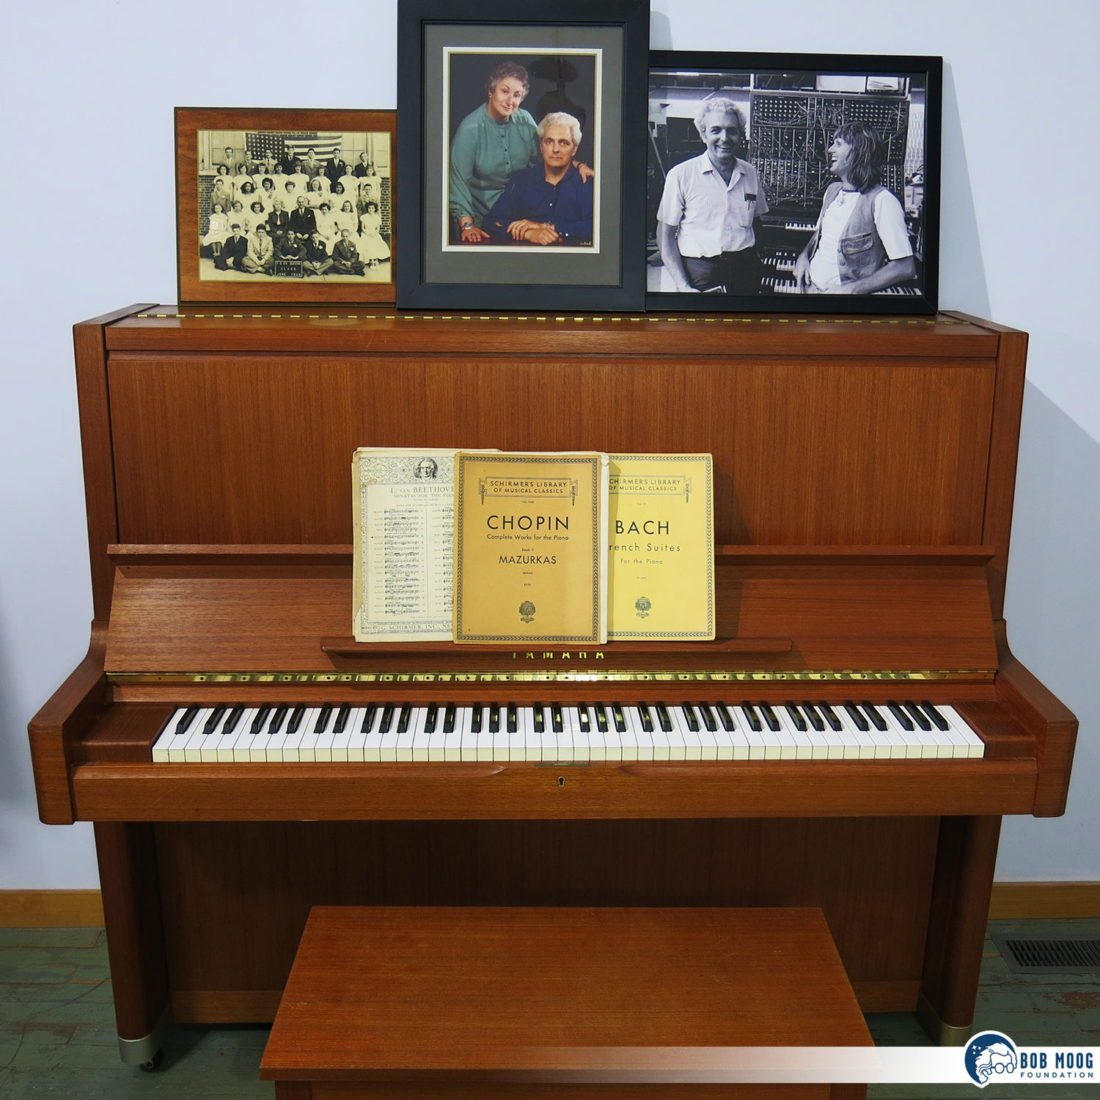 Bob Moog's piano